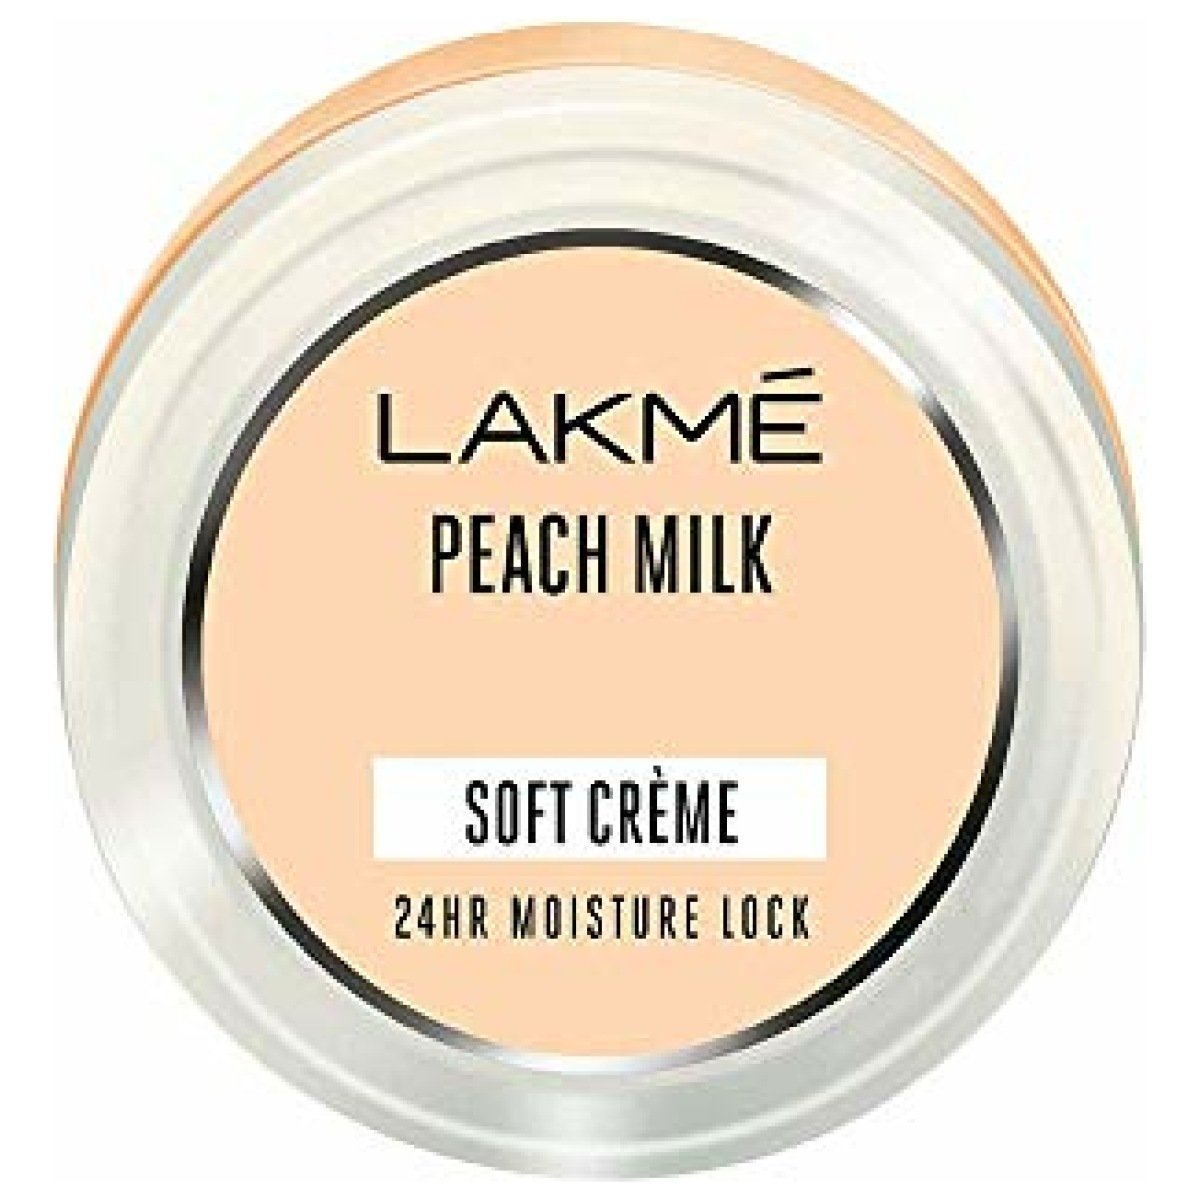 Lakme Peach Milk Soft Creme Moisturizer Lightweight Face Cream 200g